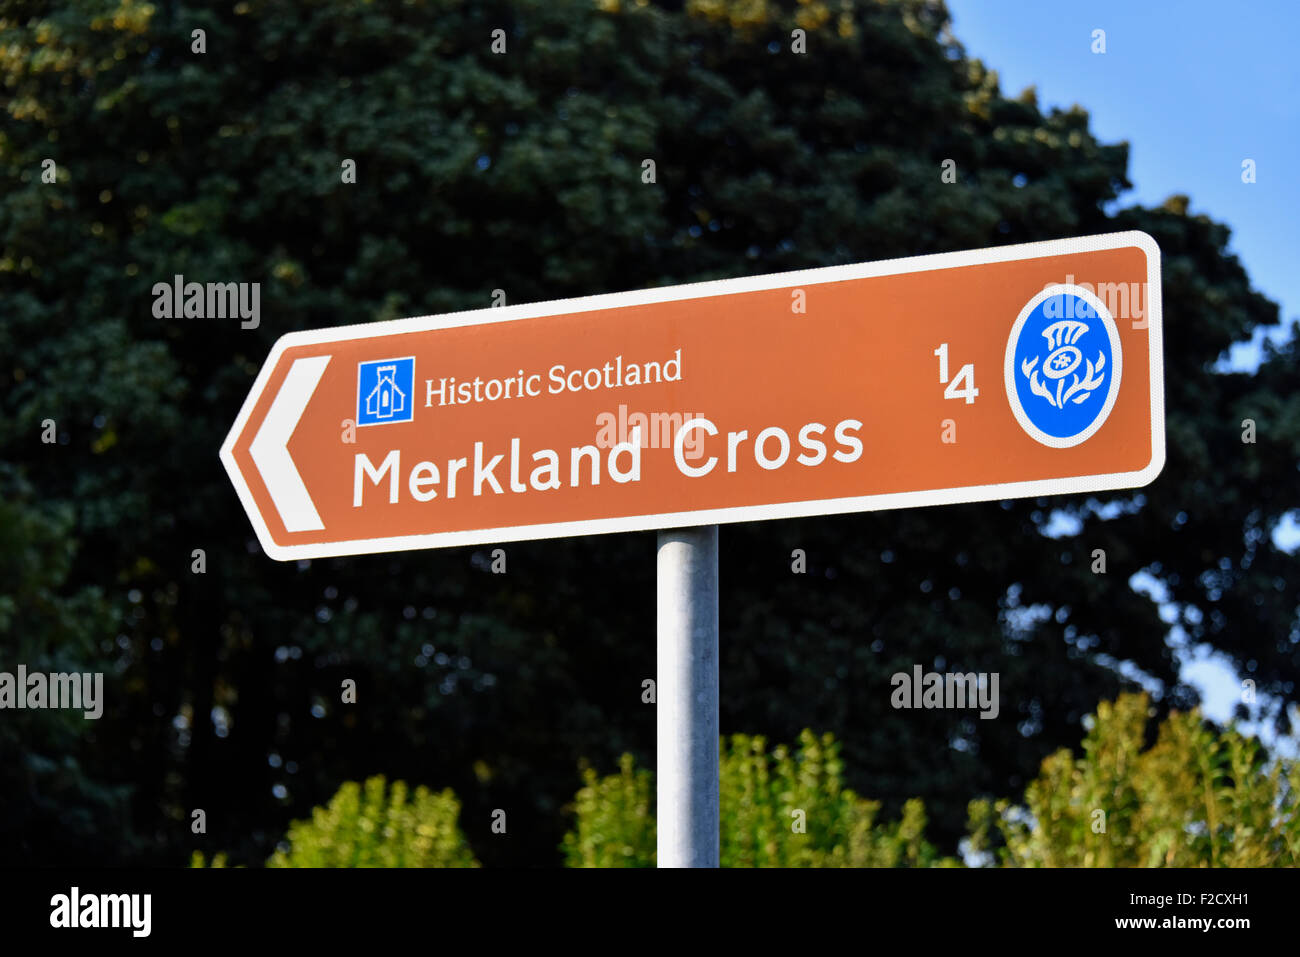 Historic Scotland sign. Merkland Cross. Woodhouse Farm, Kirtlebridge, Dumfries and Galloway, Scotland, United Kingdom, Europe. Stock Photo